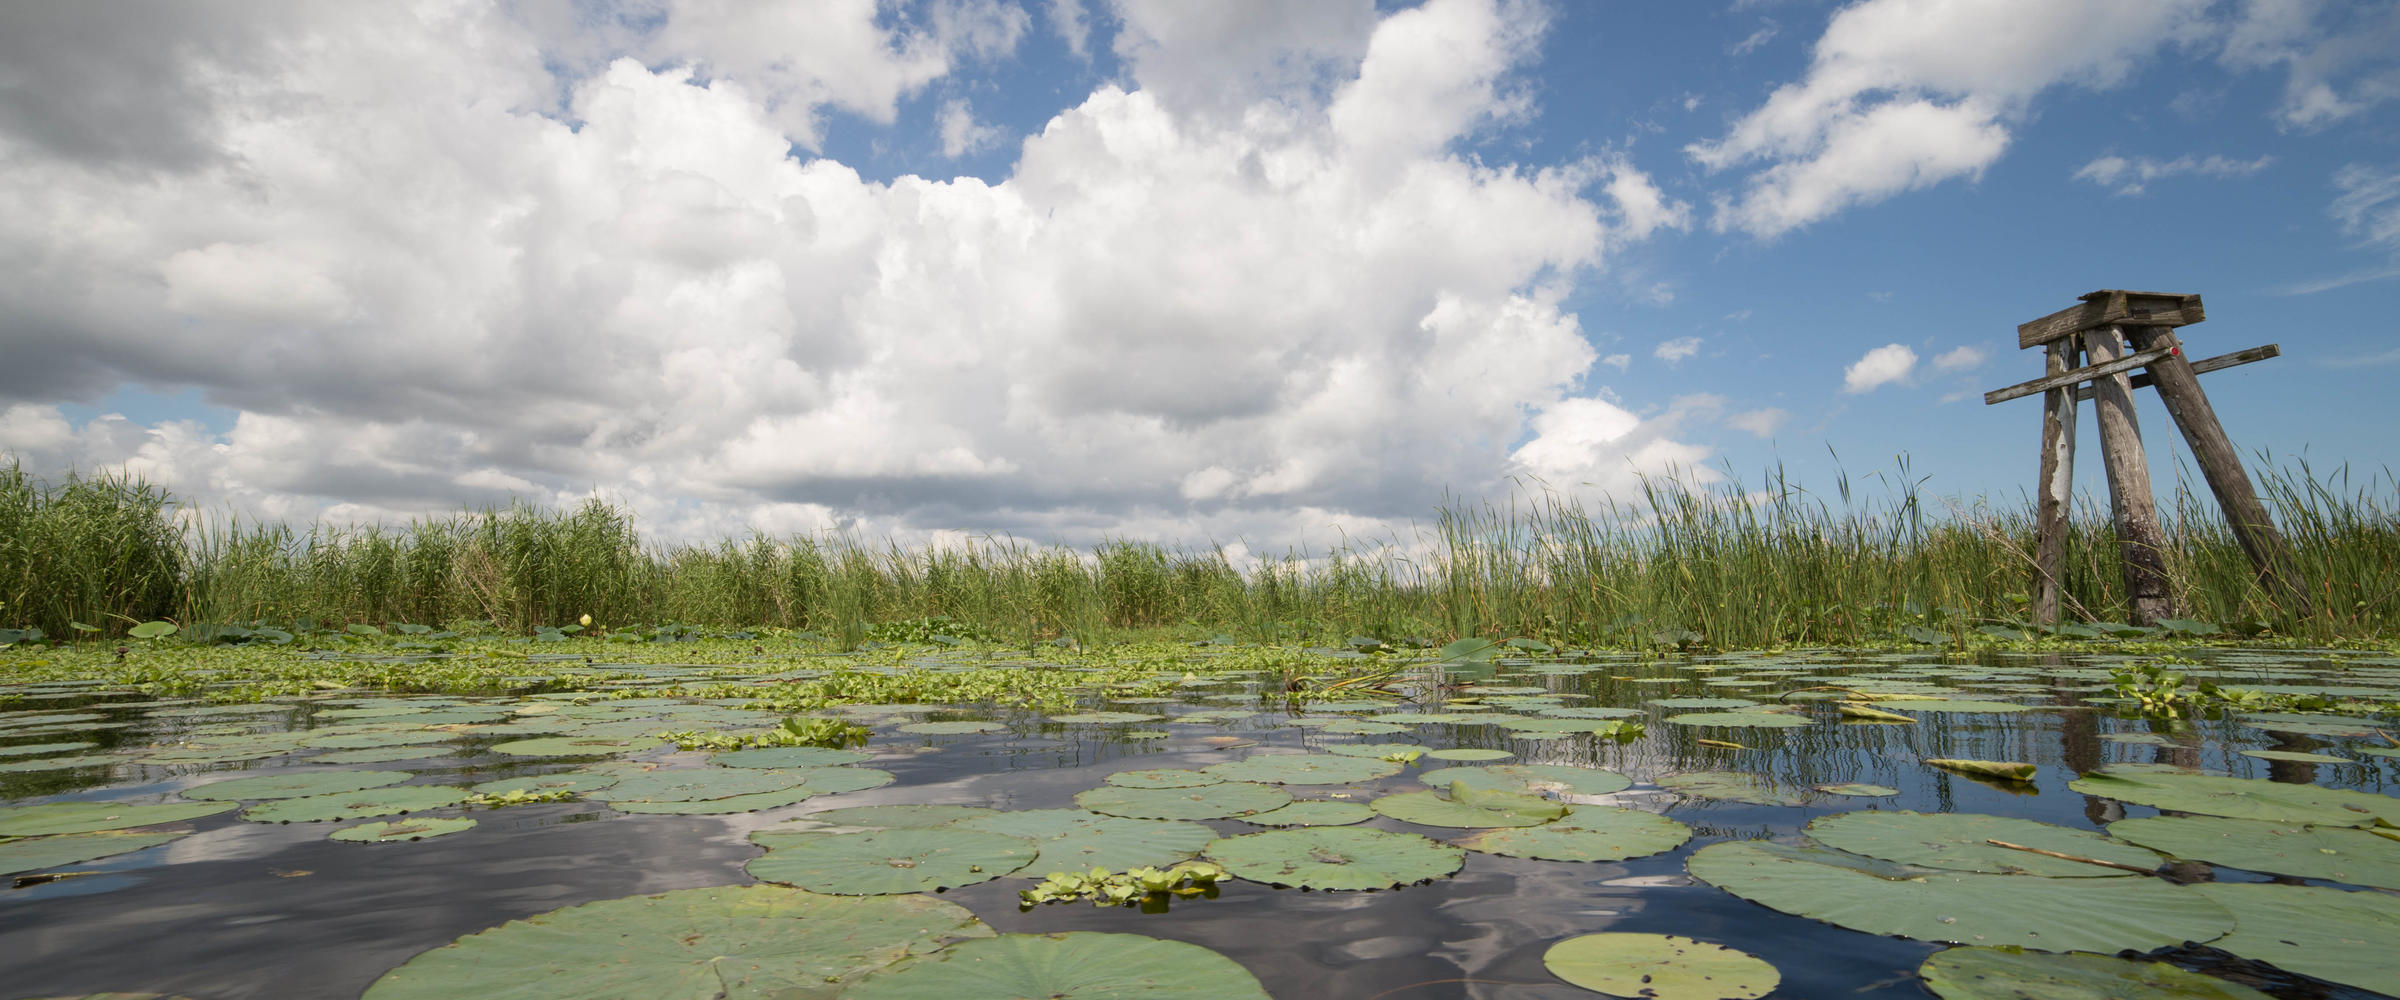 High Water Levels Threaten the Health of Lake Okeechobee Audubon Florida